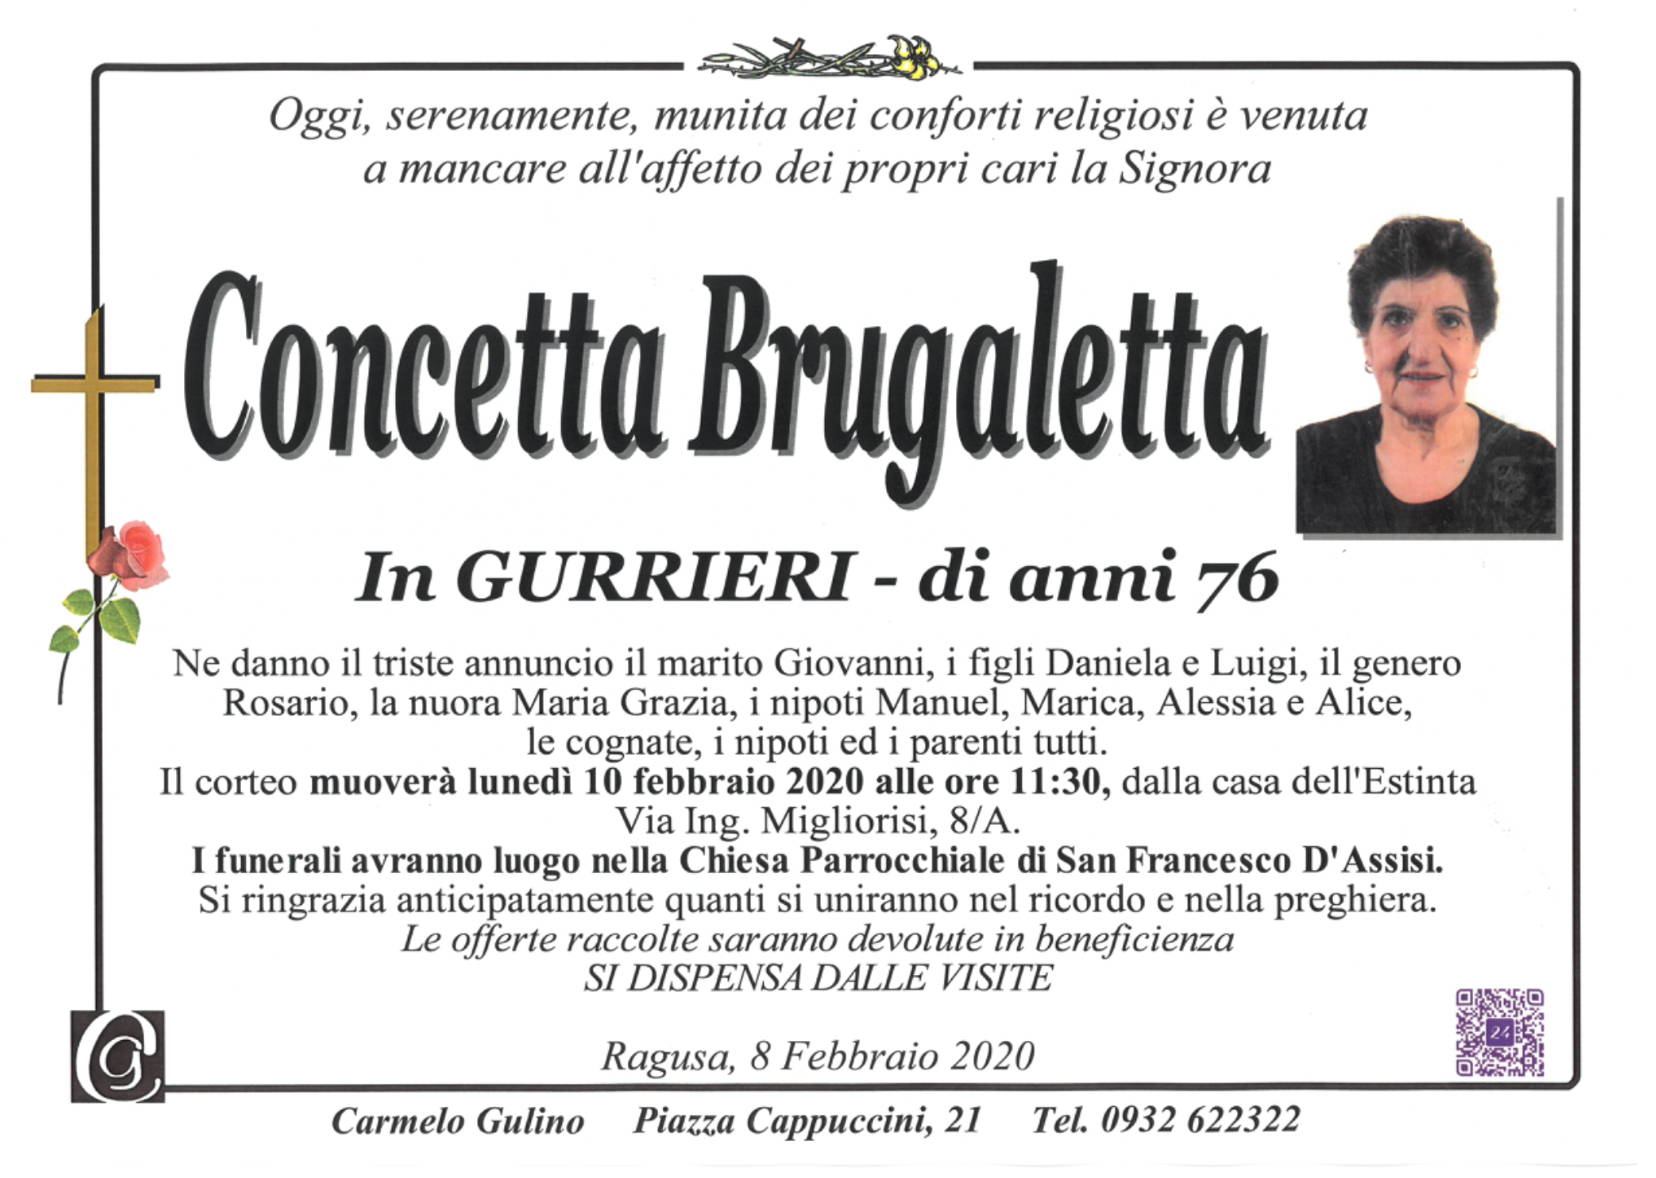 Concetta Brugaletta